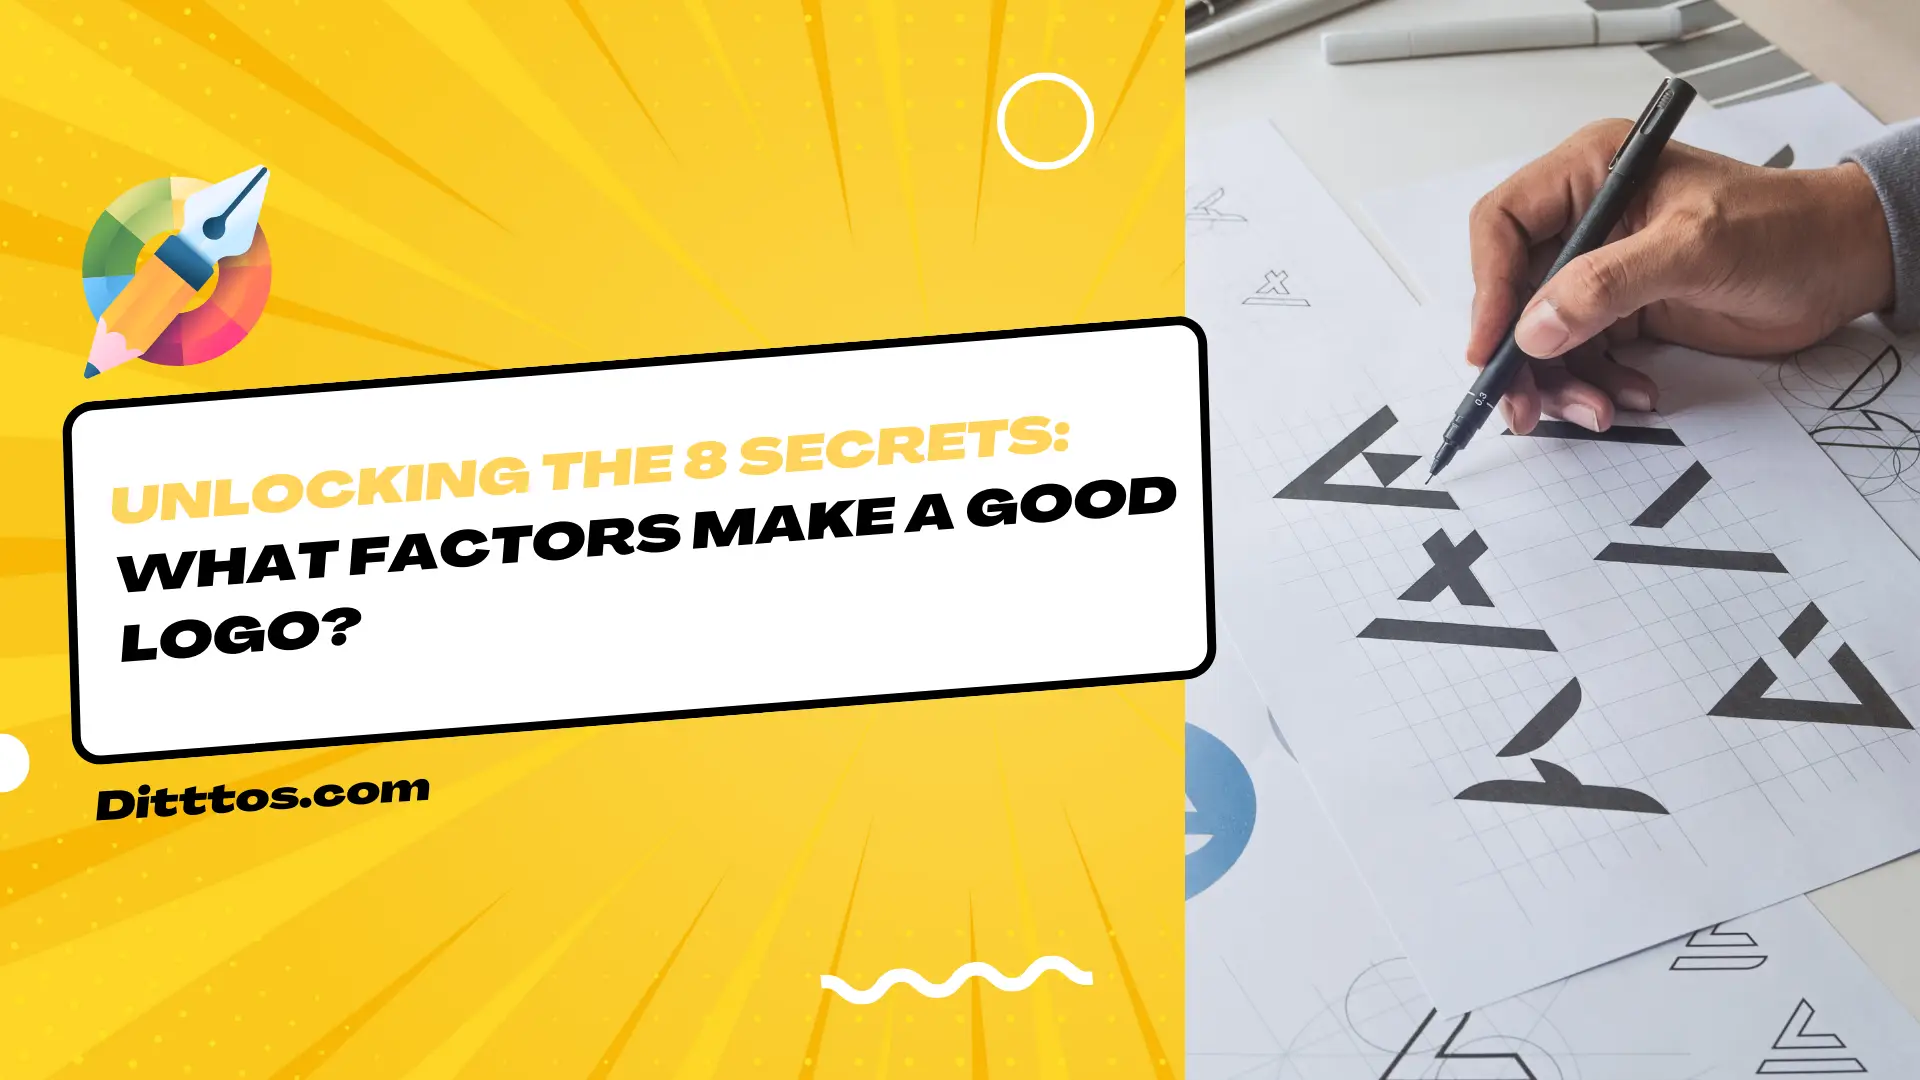 Unlocking the 8 Secrets - What Factors Make a Good Logo